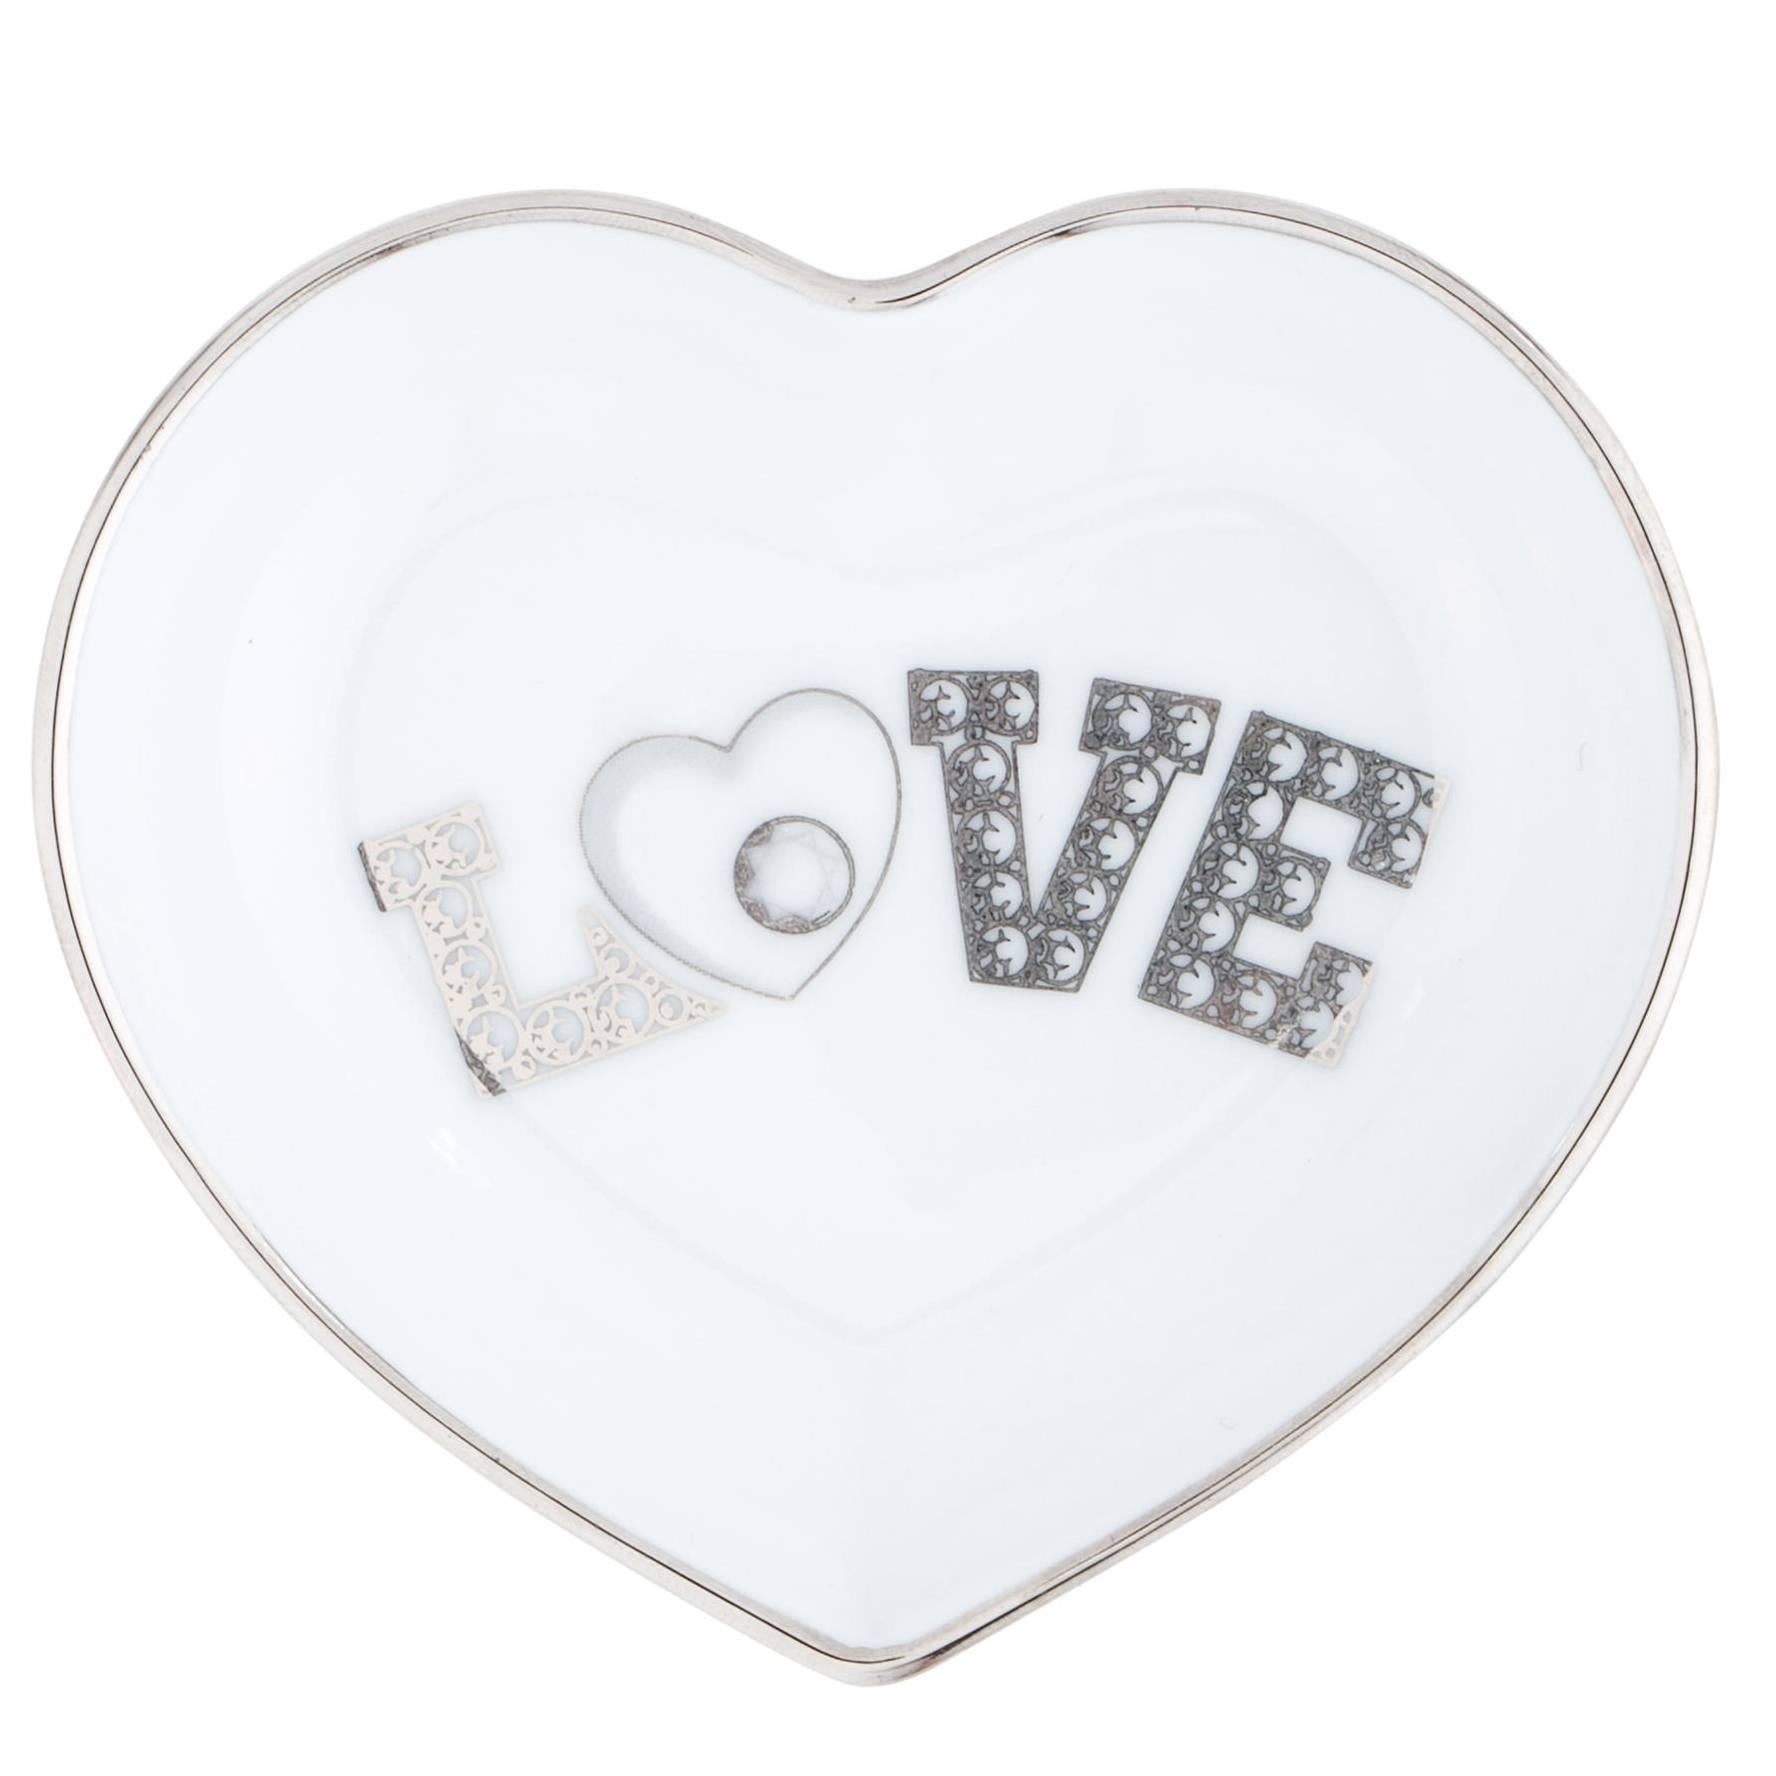 Chopard 'LOVE' Heart White Porcelain Silver Metal Trim Dish Jewelry Tray in Box